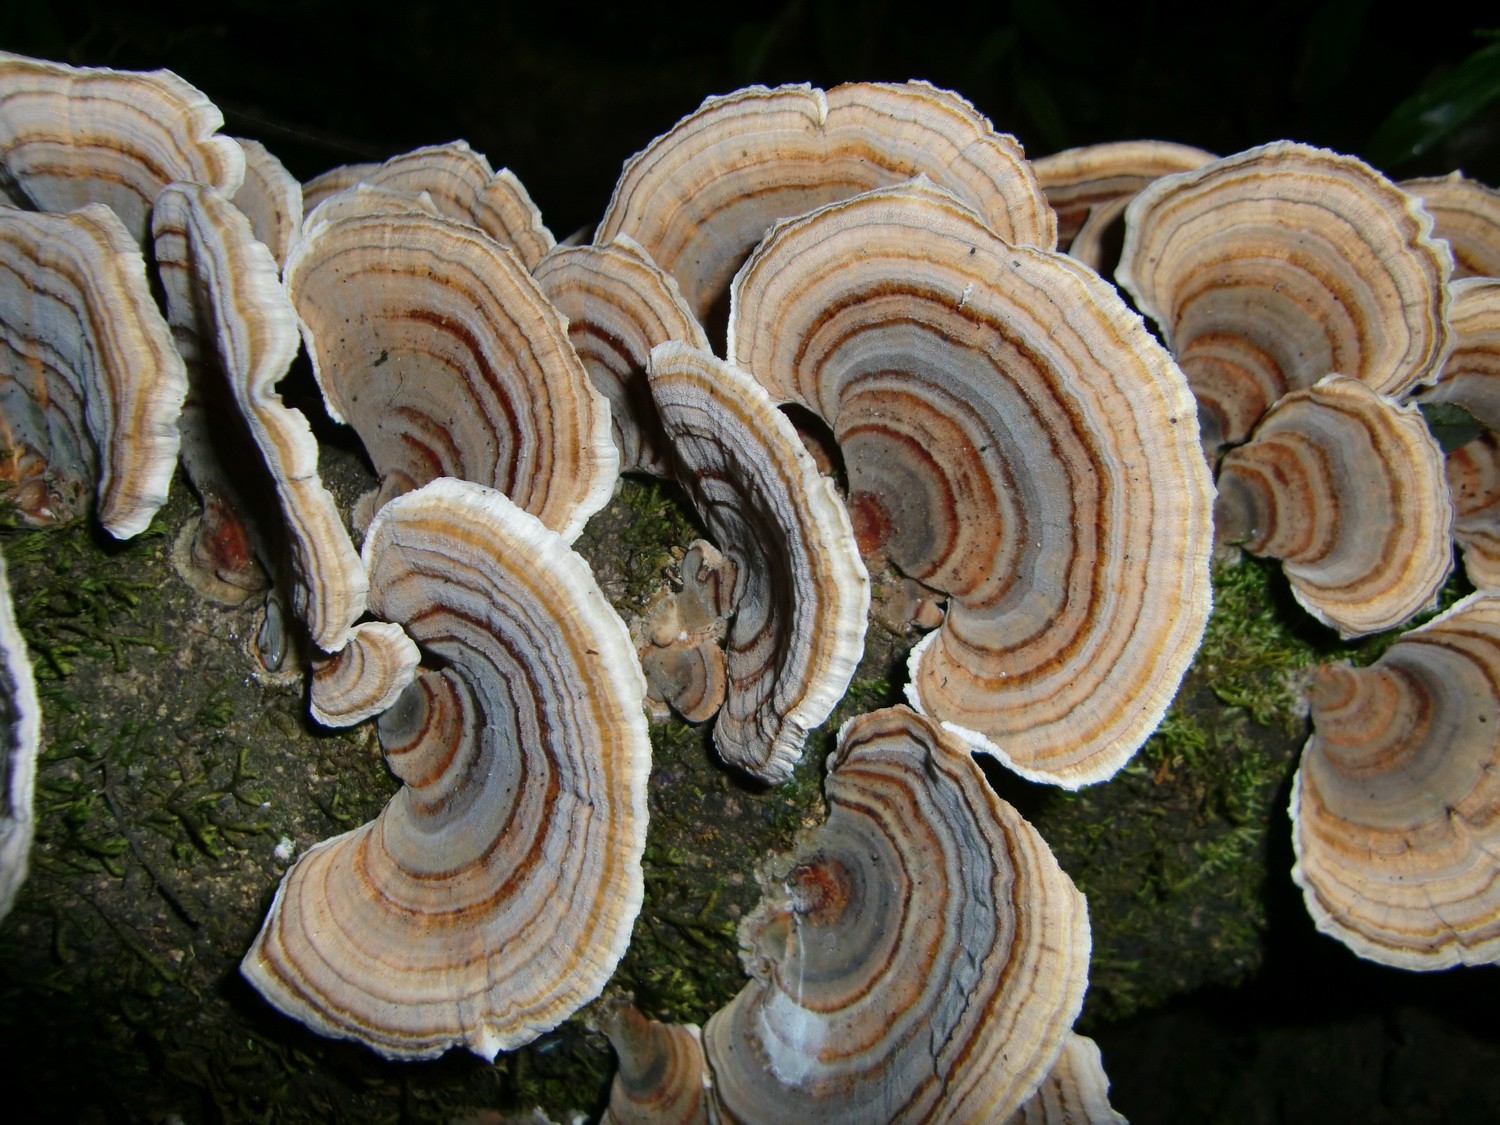 Detail of mushrooms